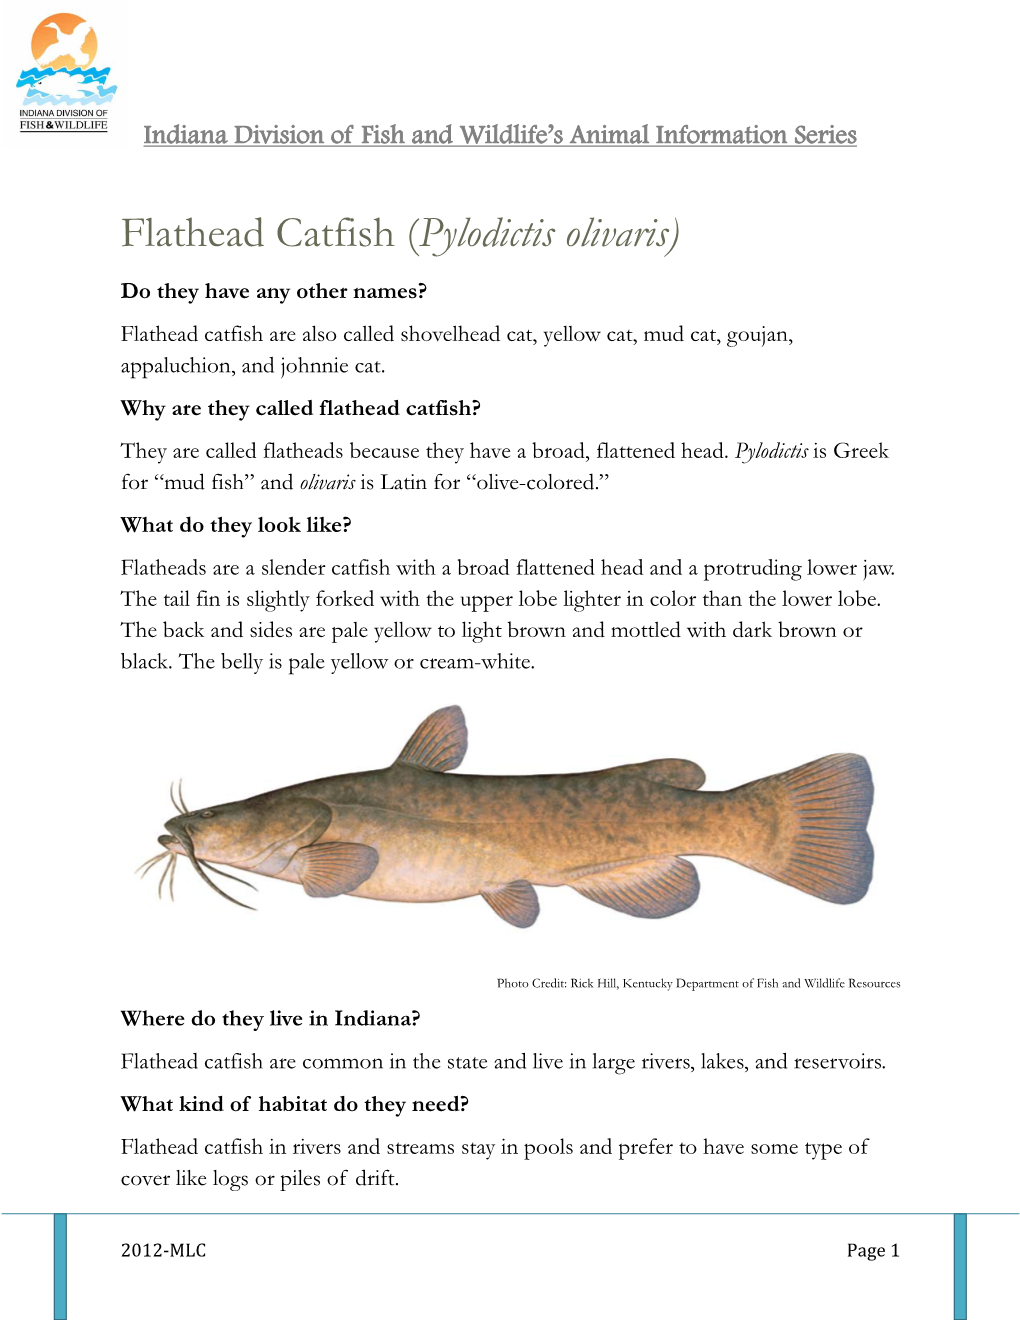 Flathead Catfish (Pylodictis Olivaris)